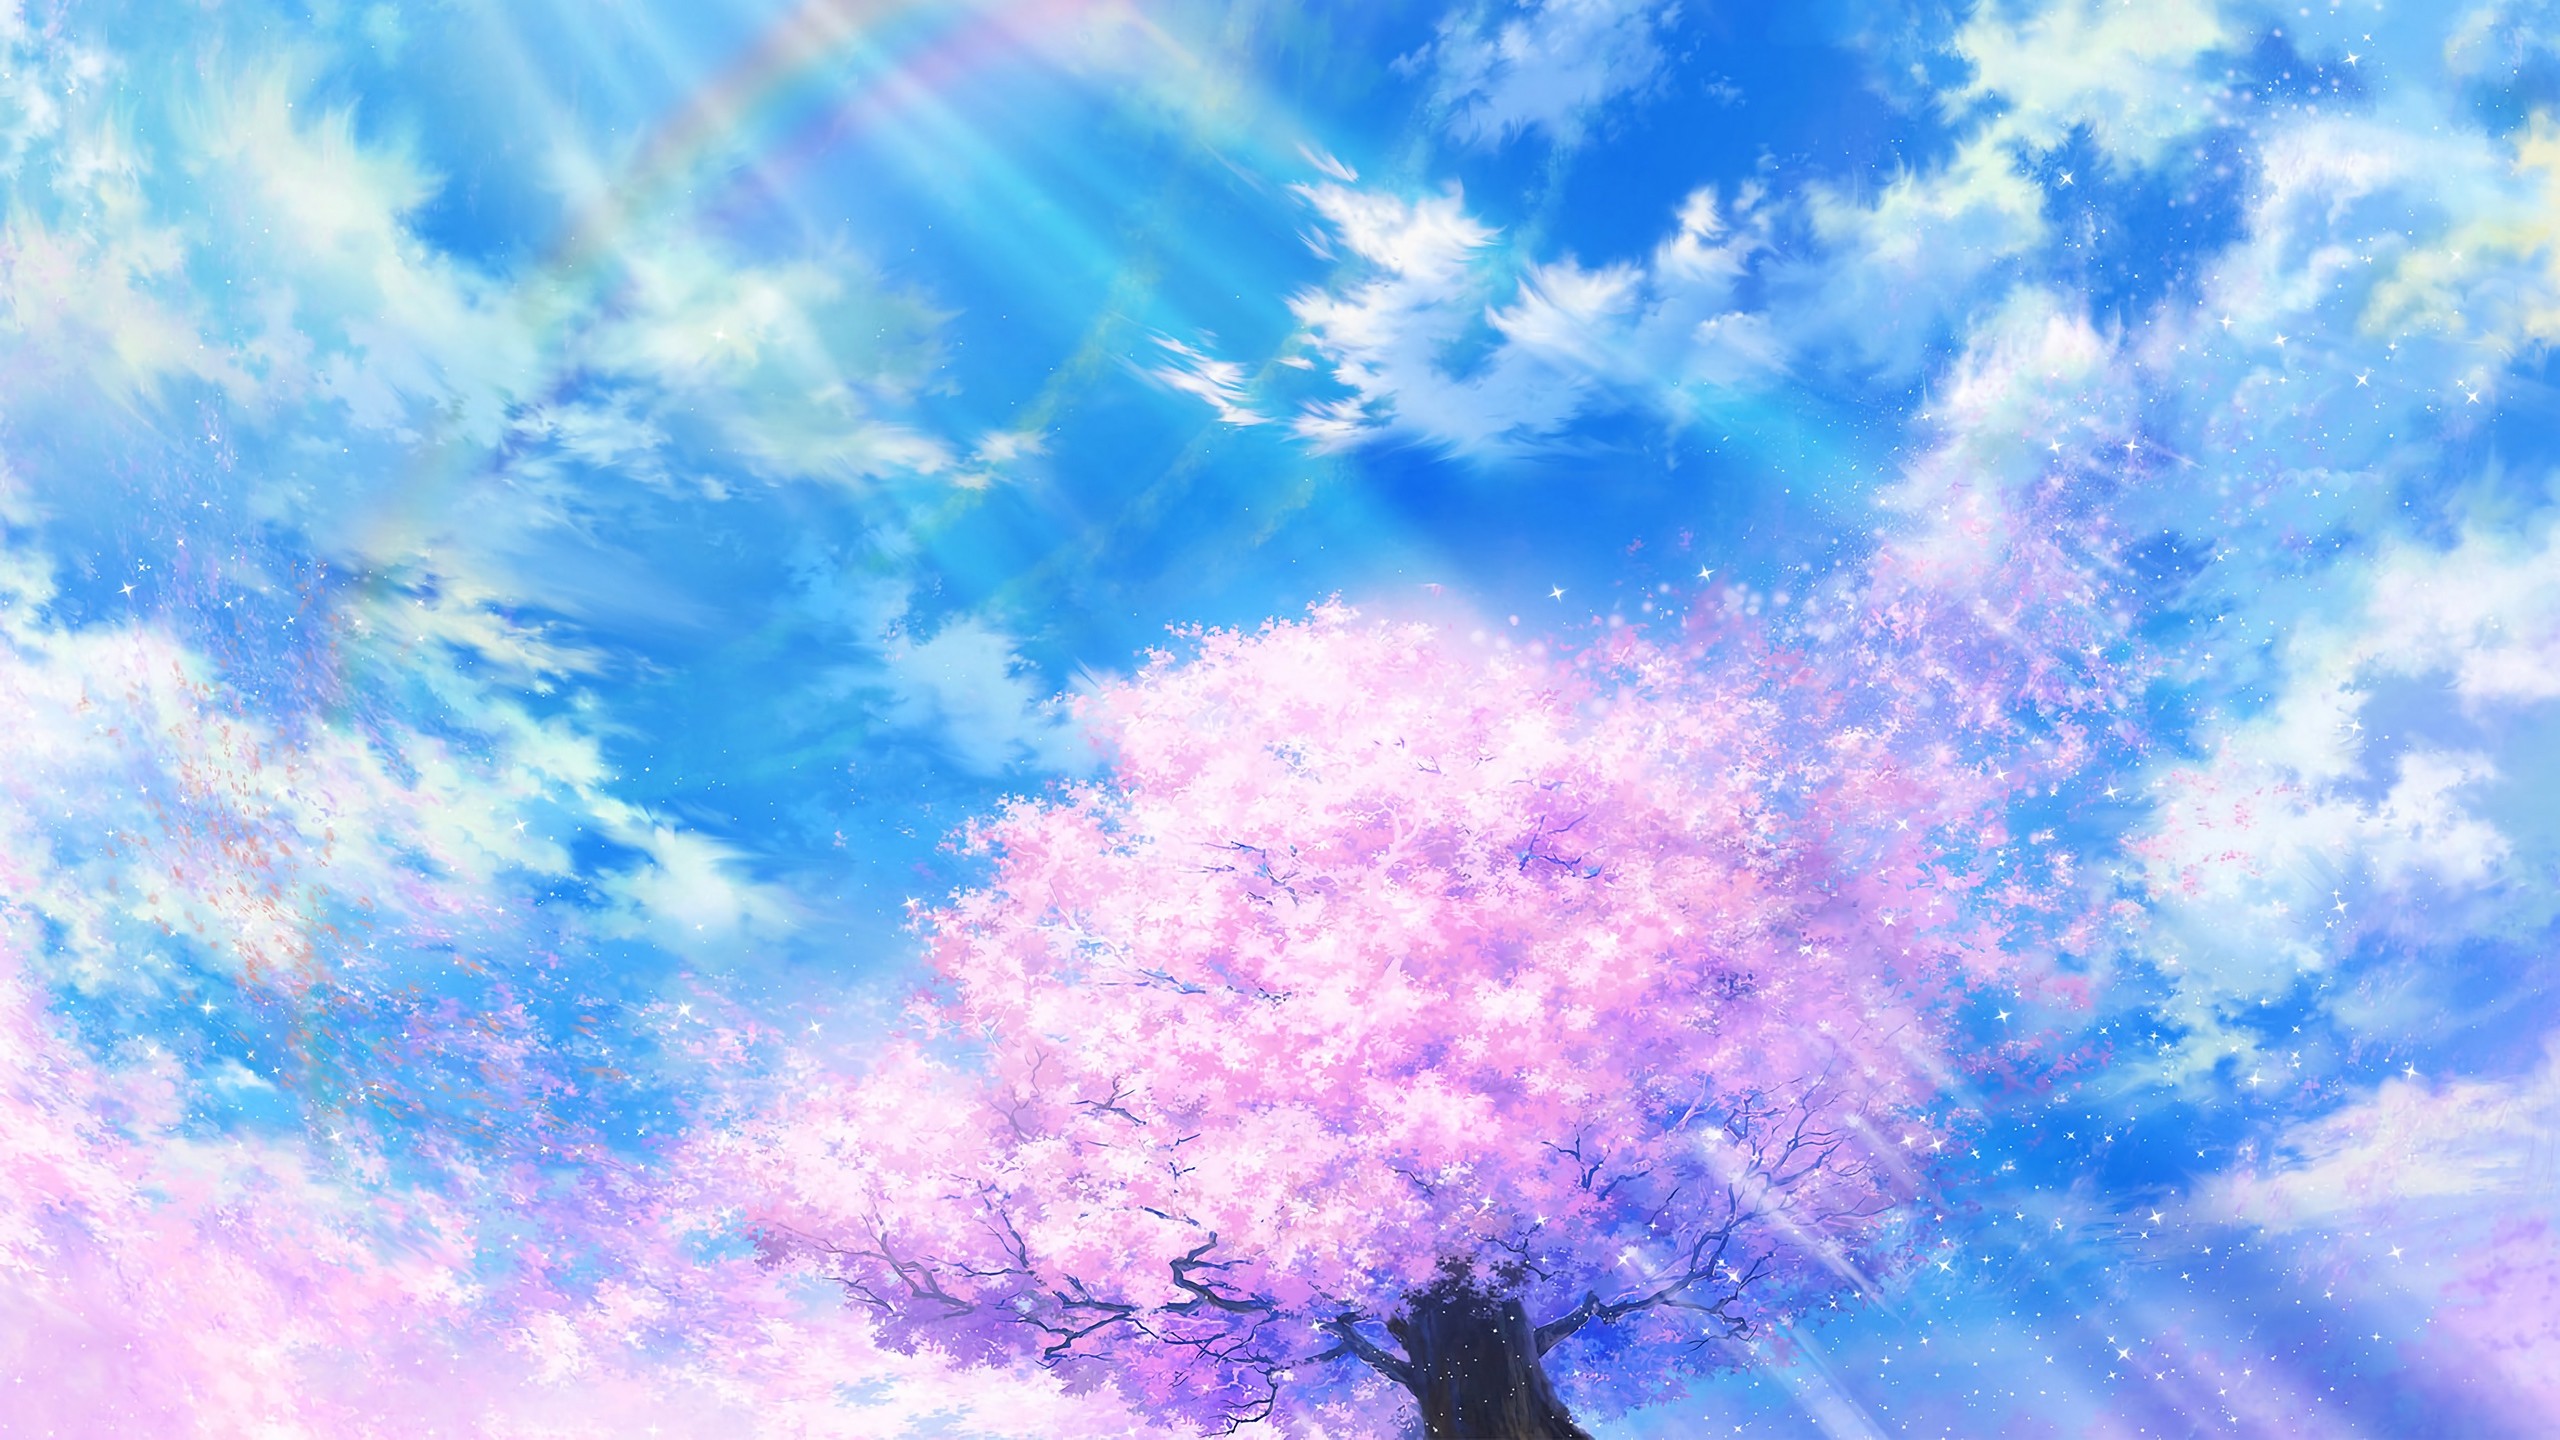 Anime Cloud wallpaper image